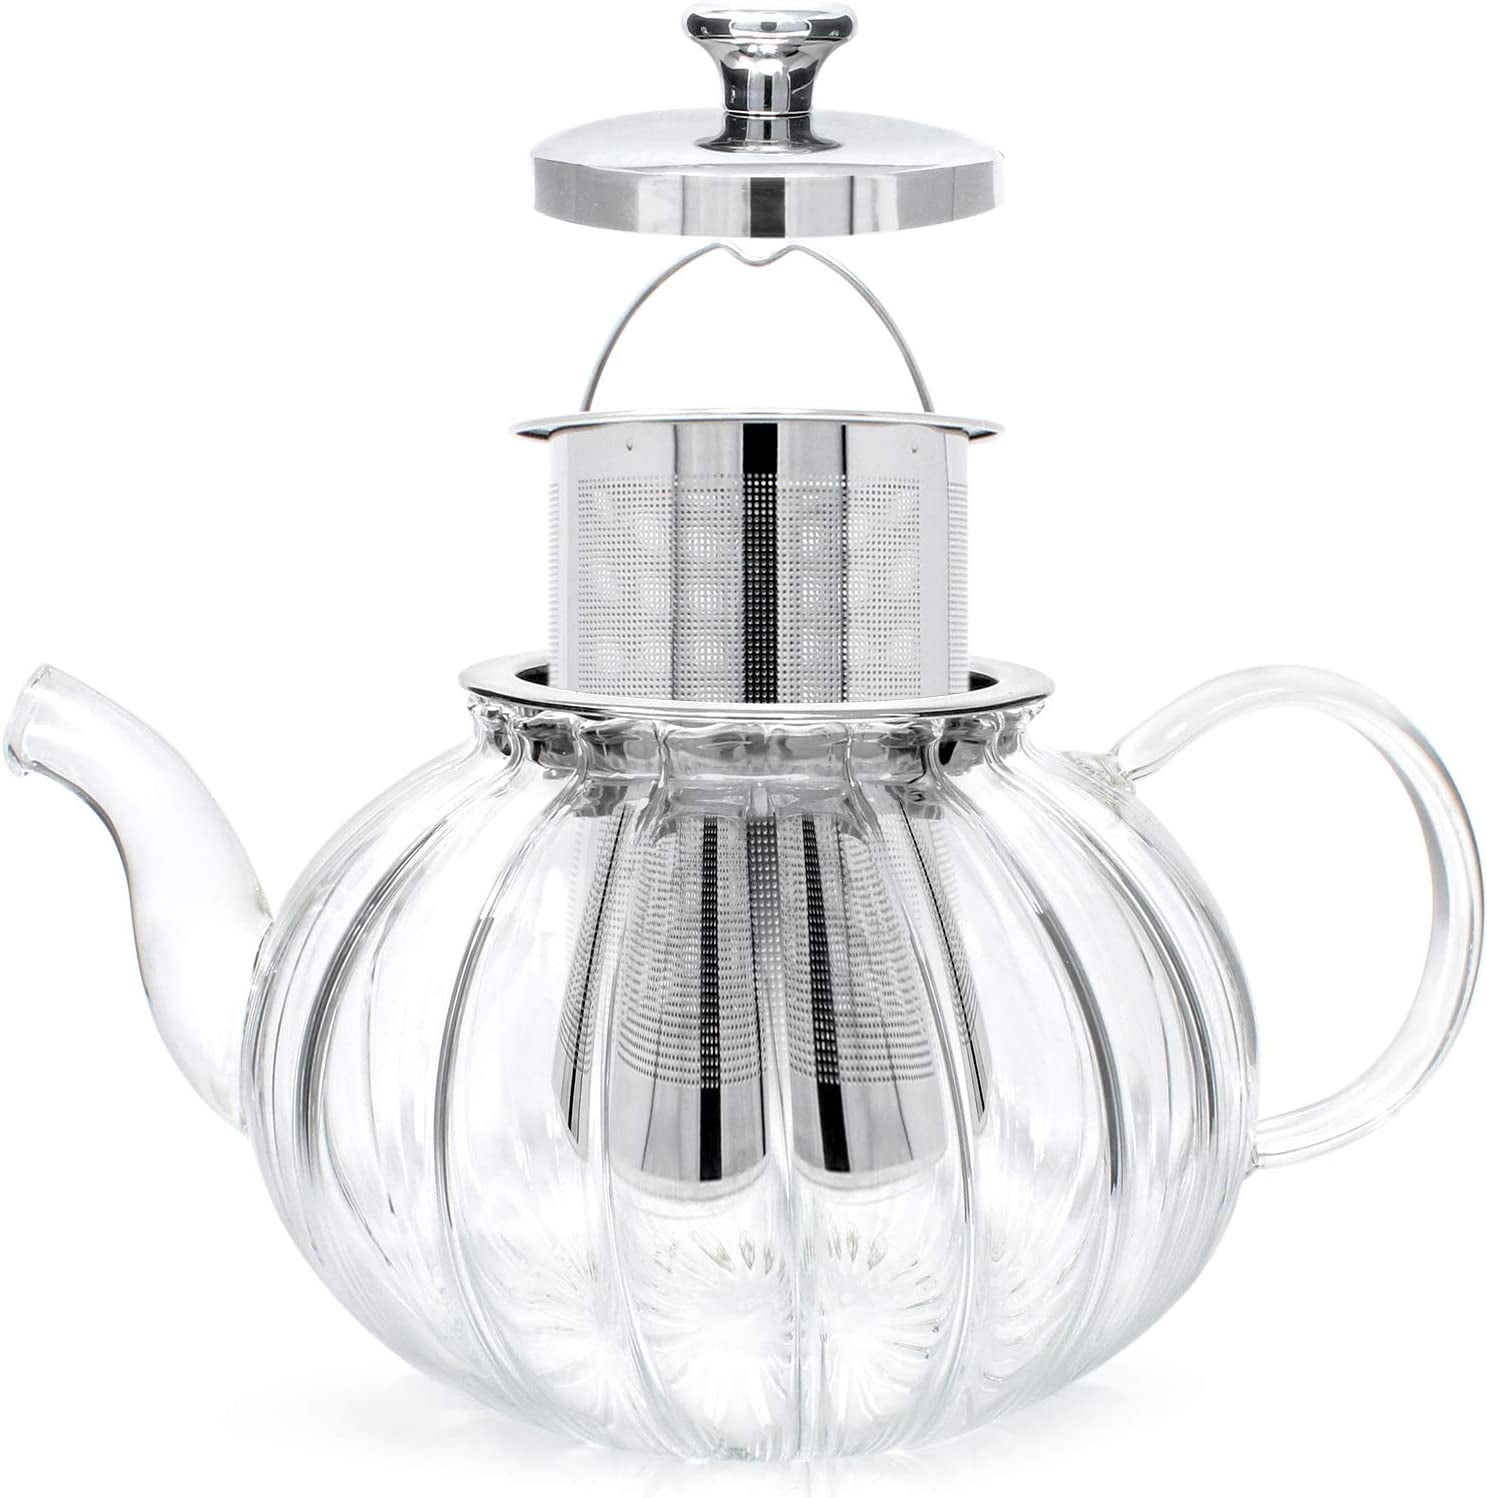 34-ounce glass tea press for loose teas and tea bags - Boing Boing